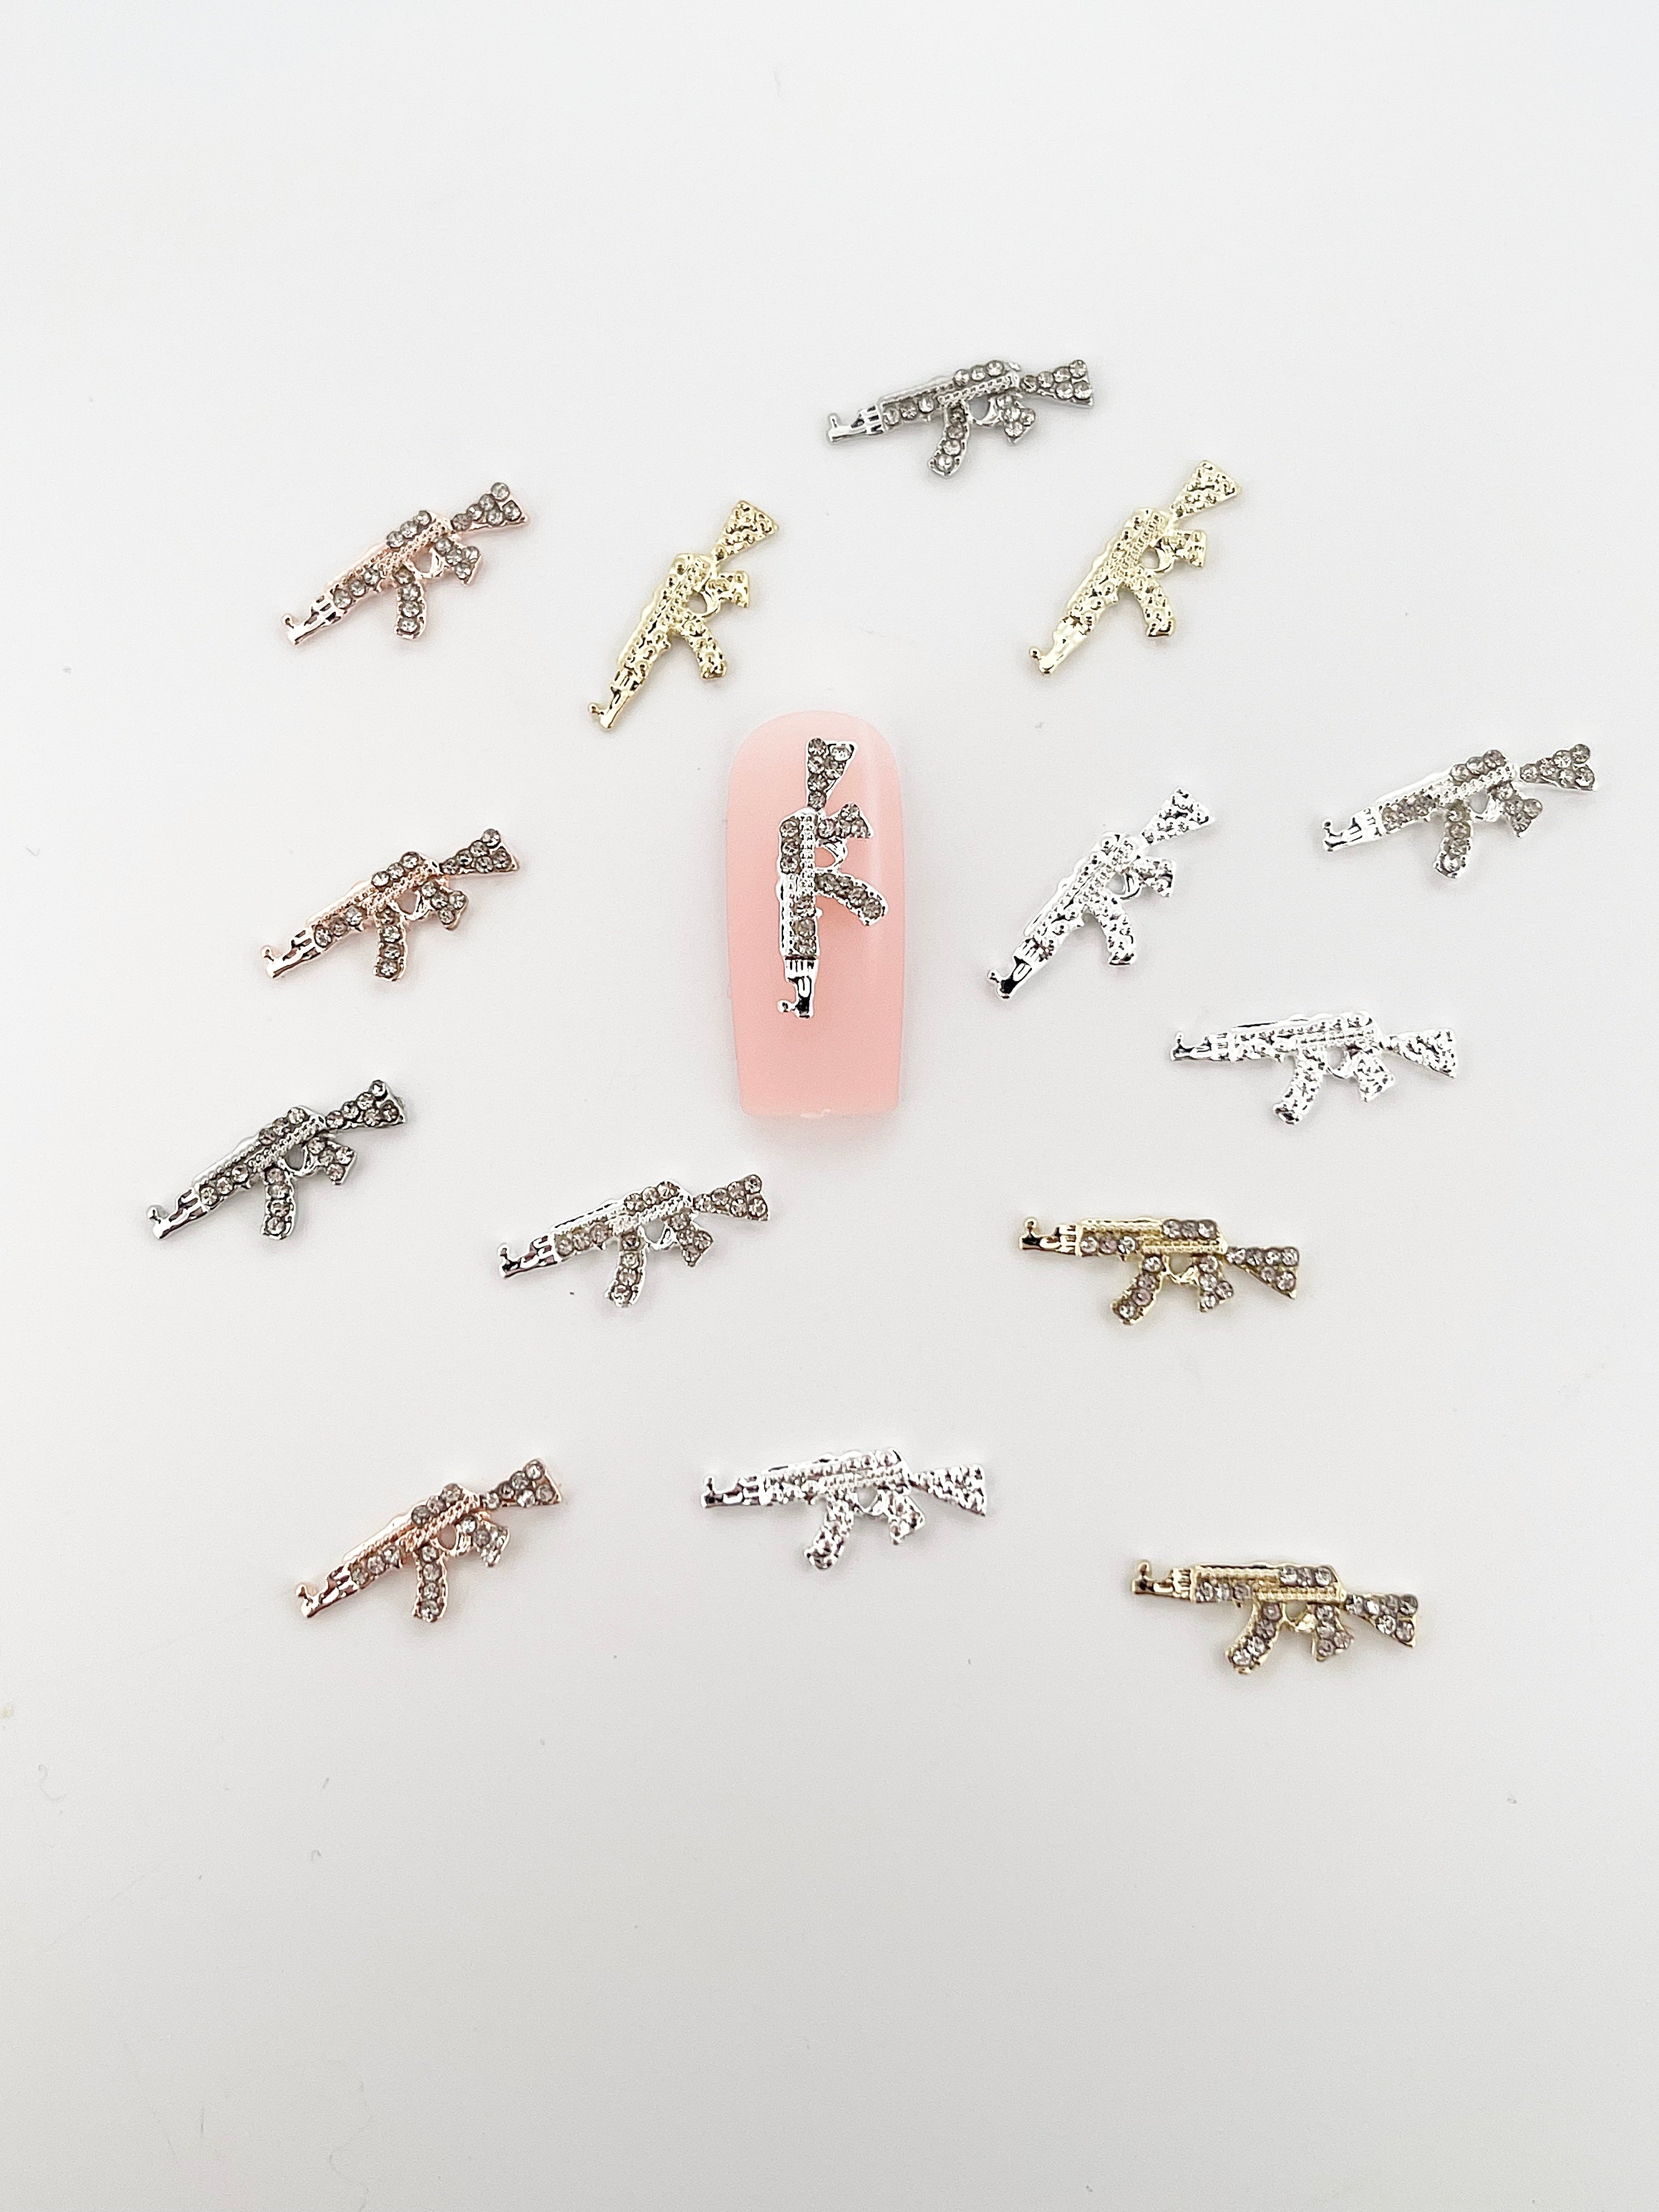 Mini Rhinestones G U N #2 Nail Charms-15 Pieces – The Additude Shop